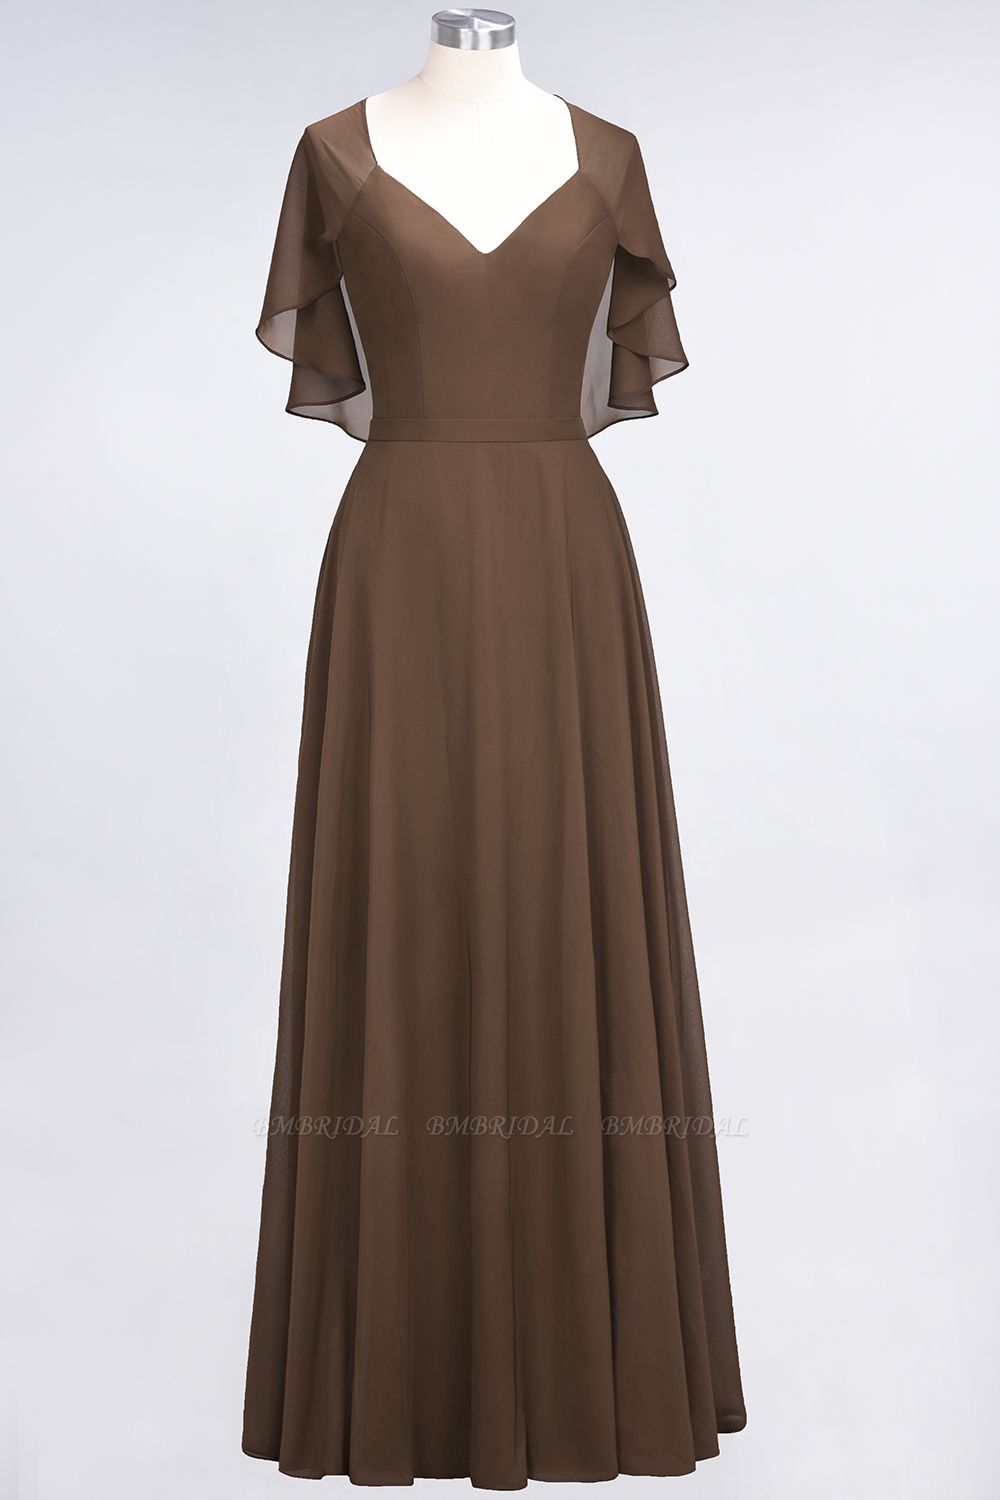 Shop Chocolate Brown Bridesmaid Dresses ...